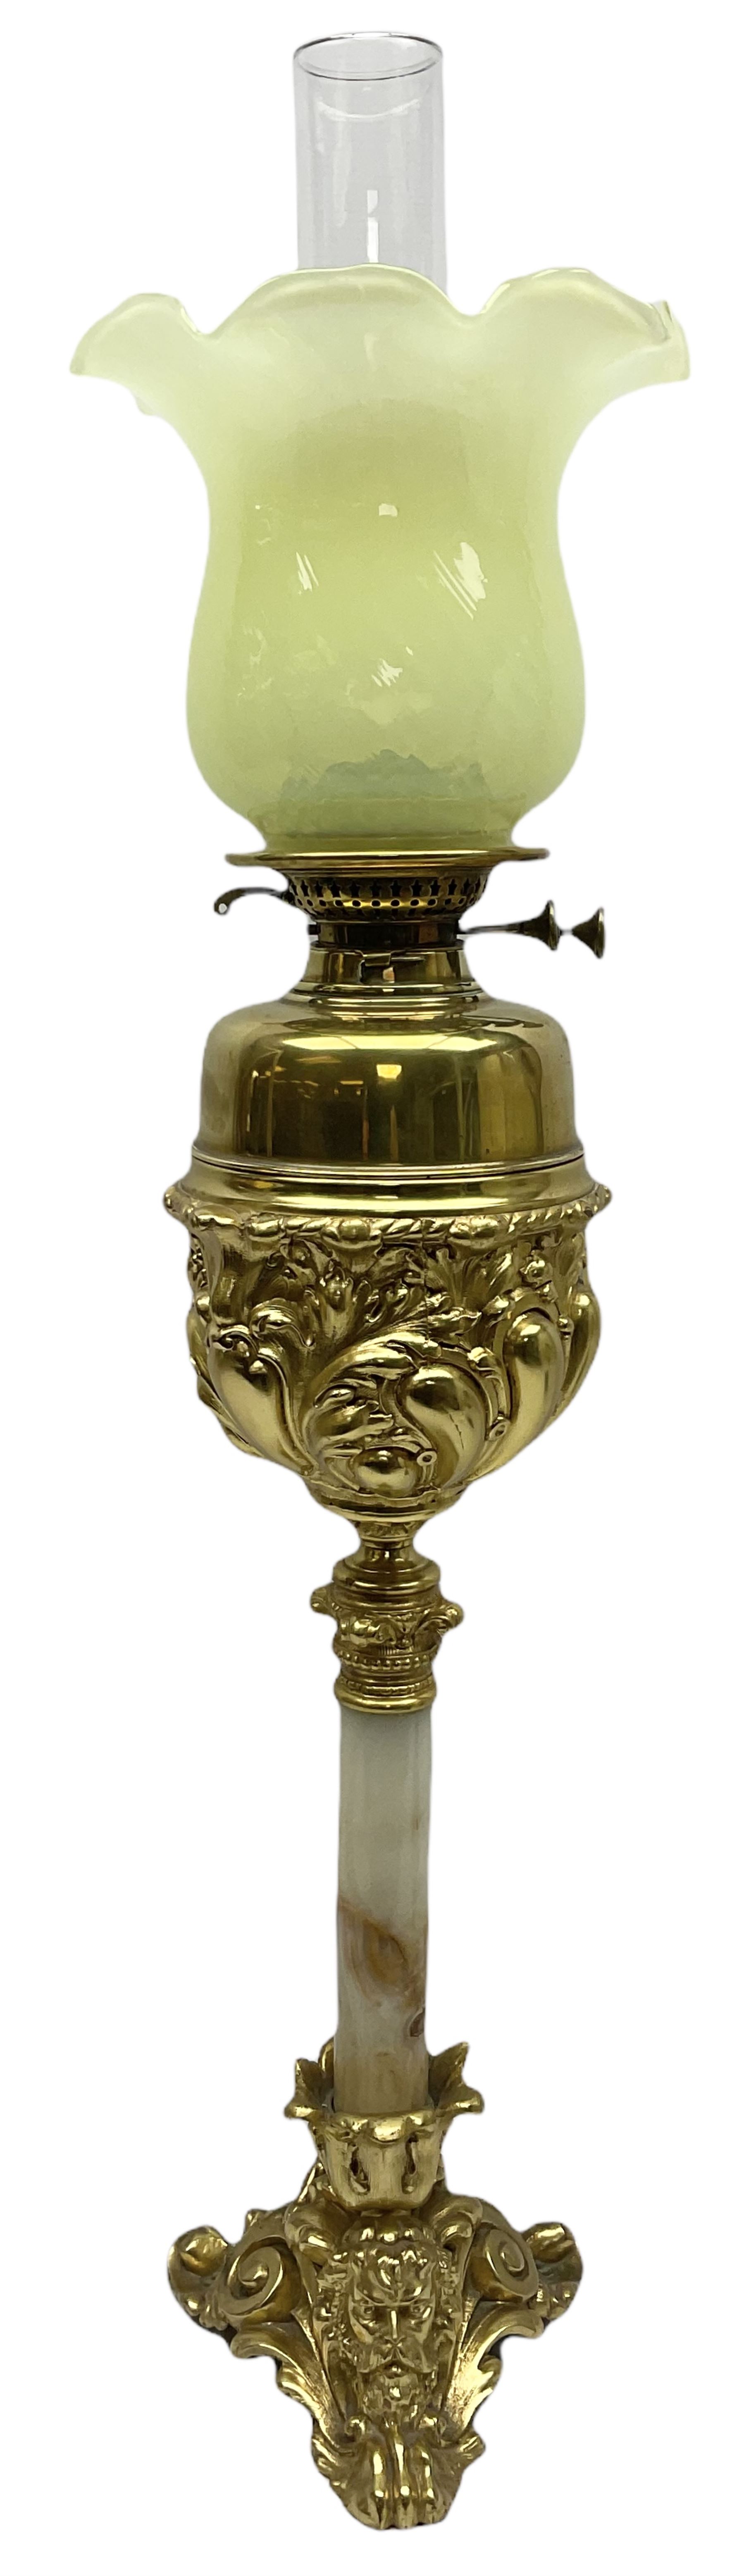 Gilt brass oil lamp